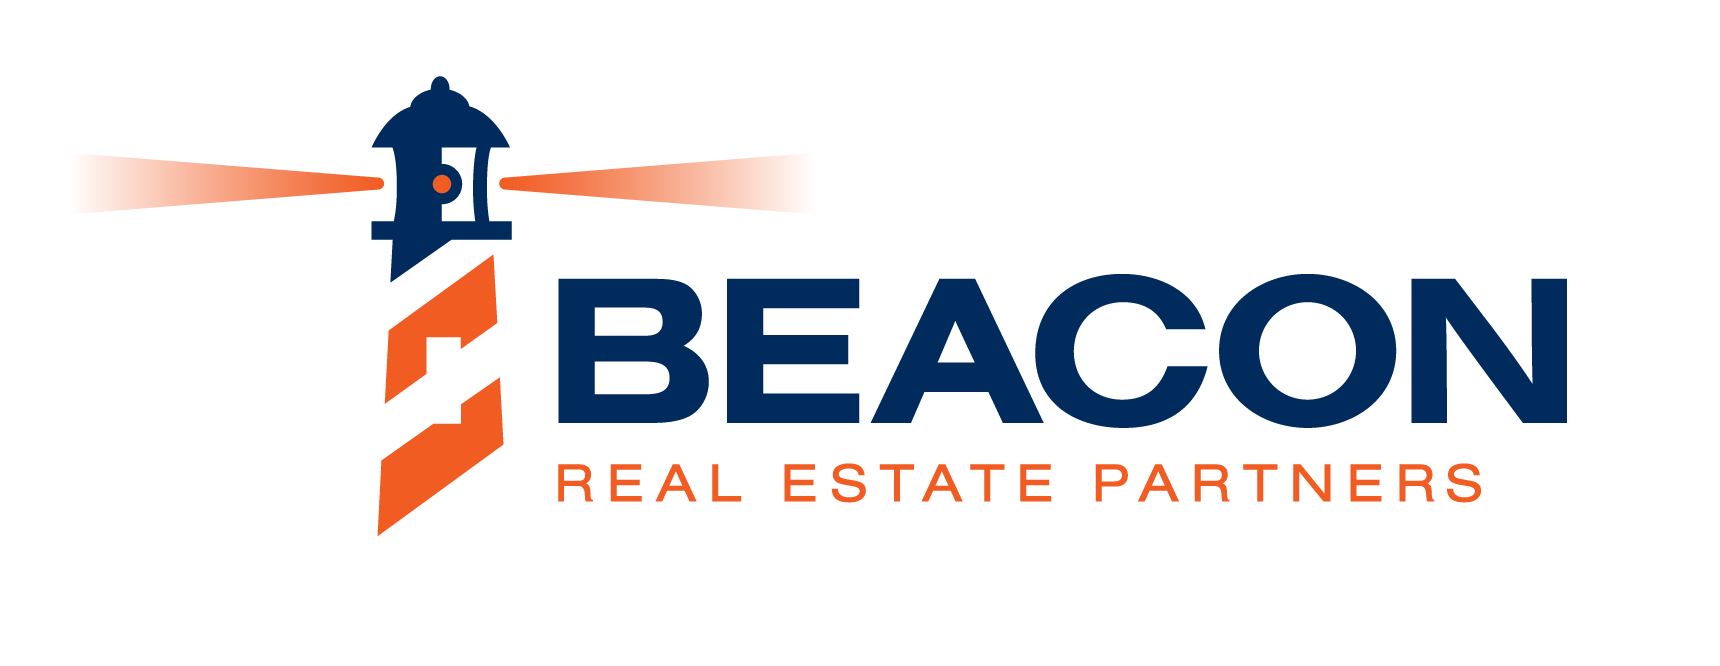 10 Beacon Real Estate Partners